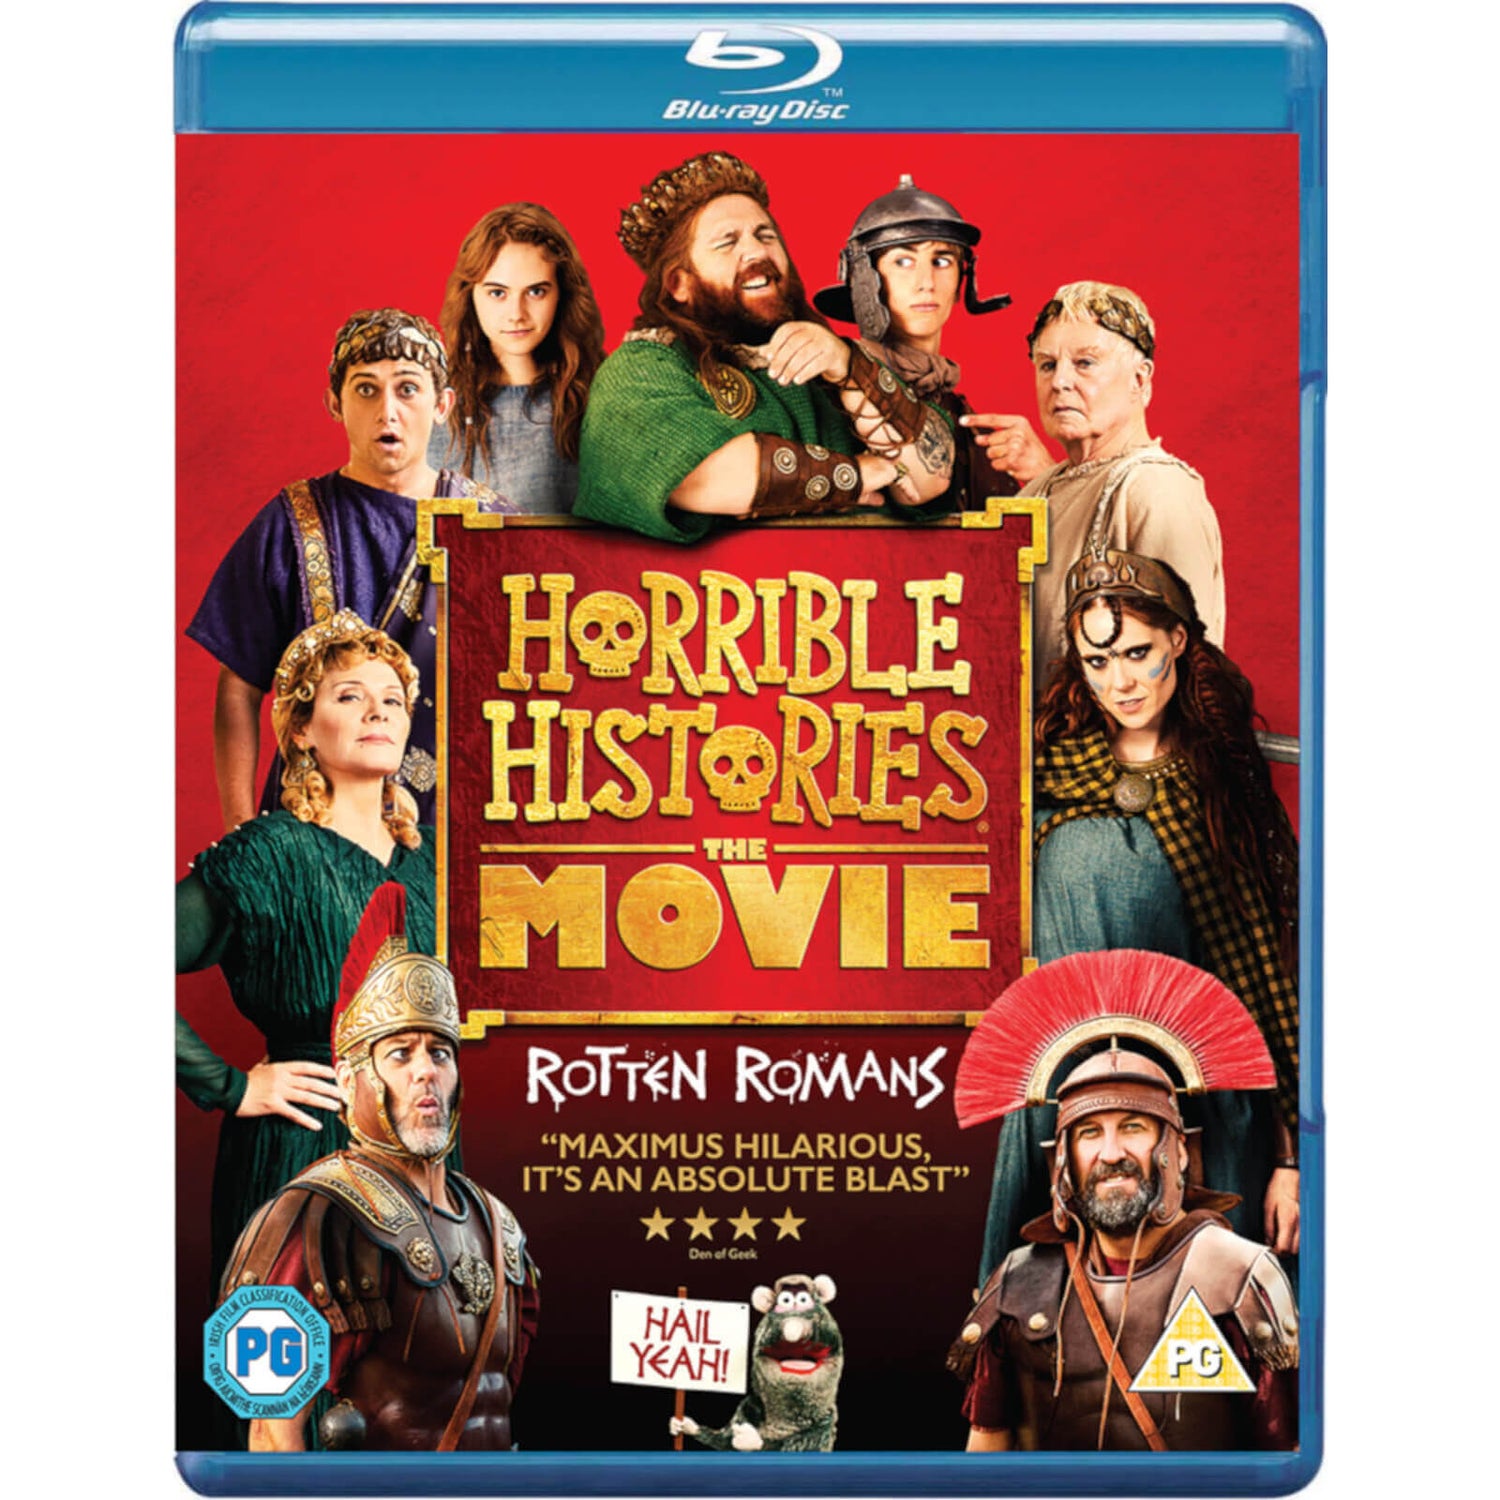 Horrible Histories : The Movie – Rotten Romans